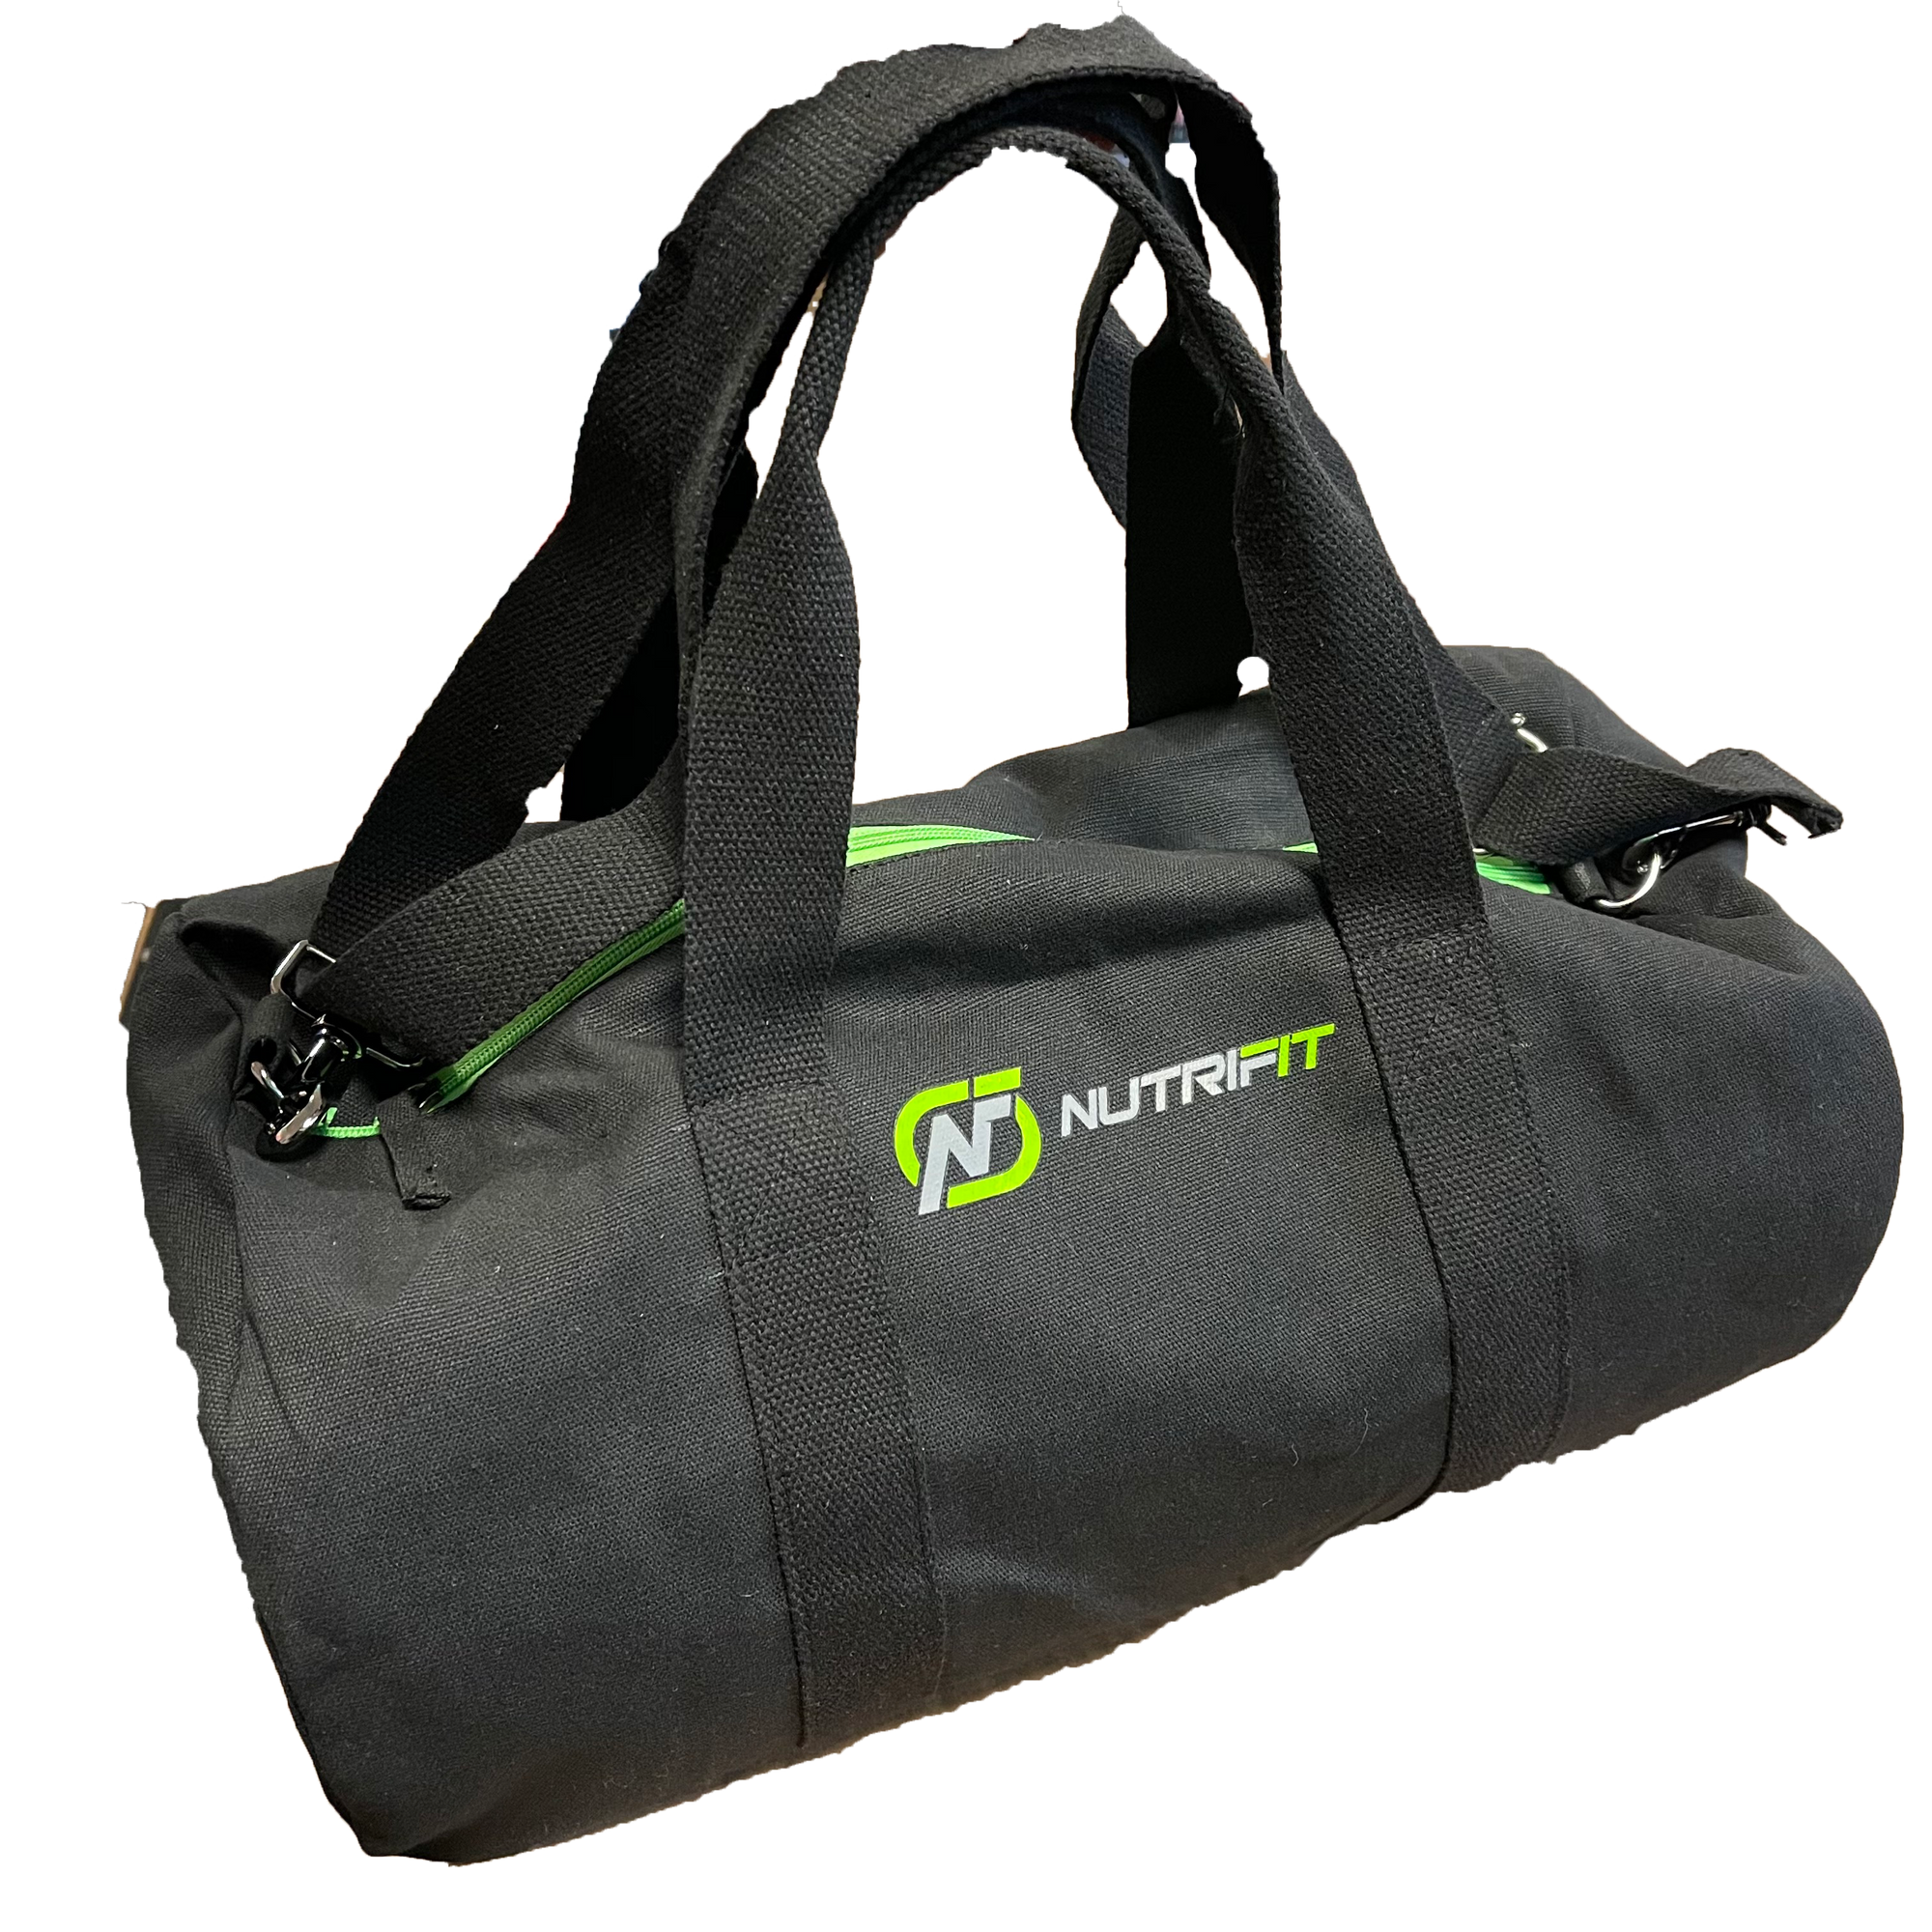 NutriFit Duffle Bag